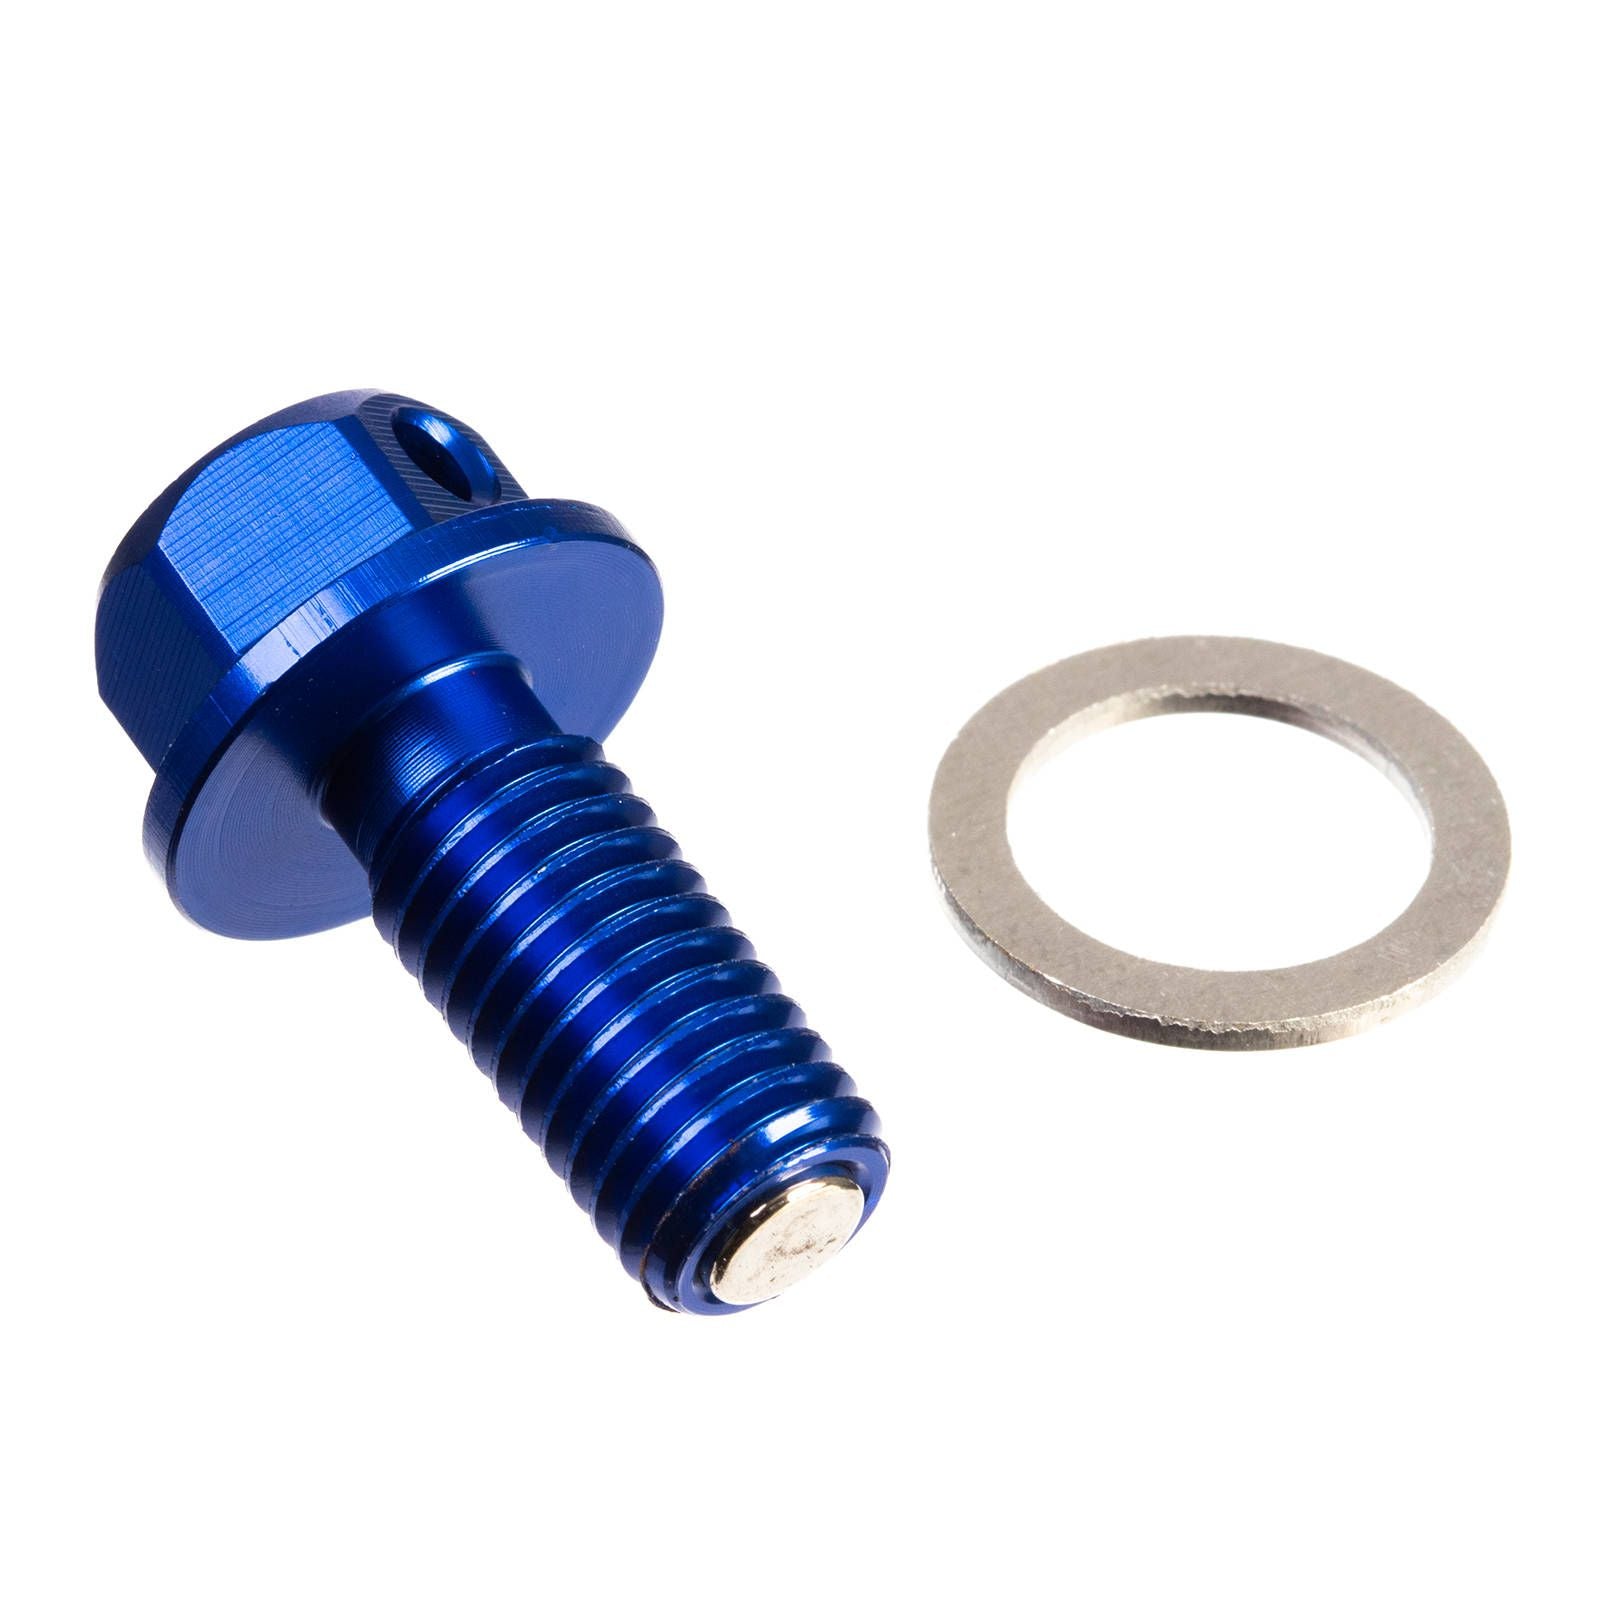 New WHITES Magnetic Sump Plug M10 x 22 x 1.5 - Blue #WPMDP102215B